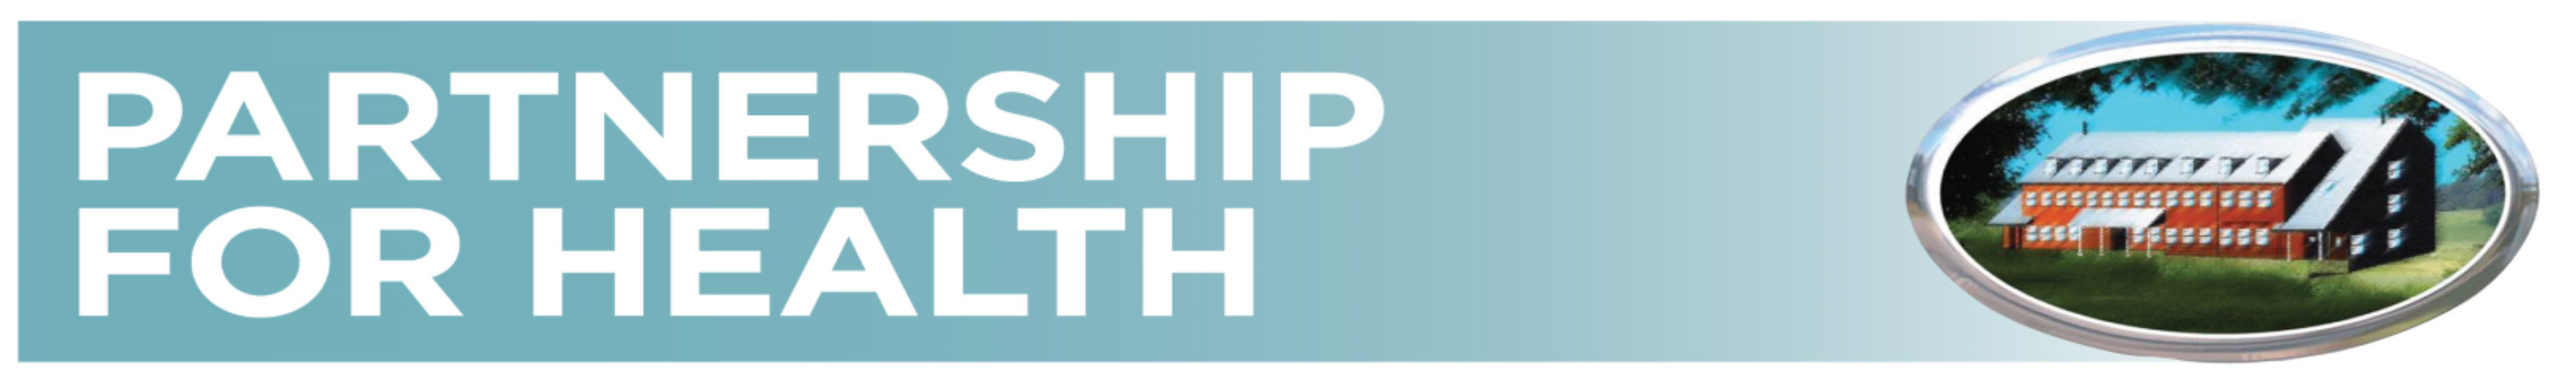 Partnership For Health Logo